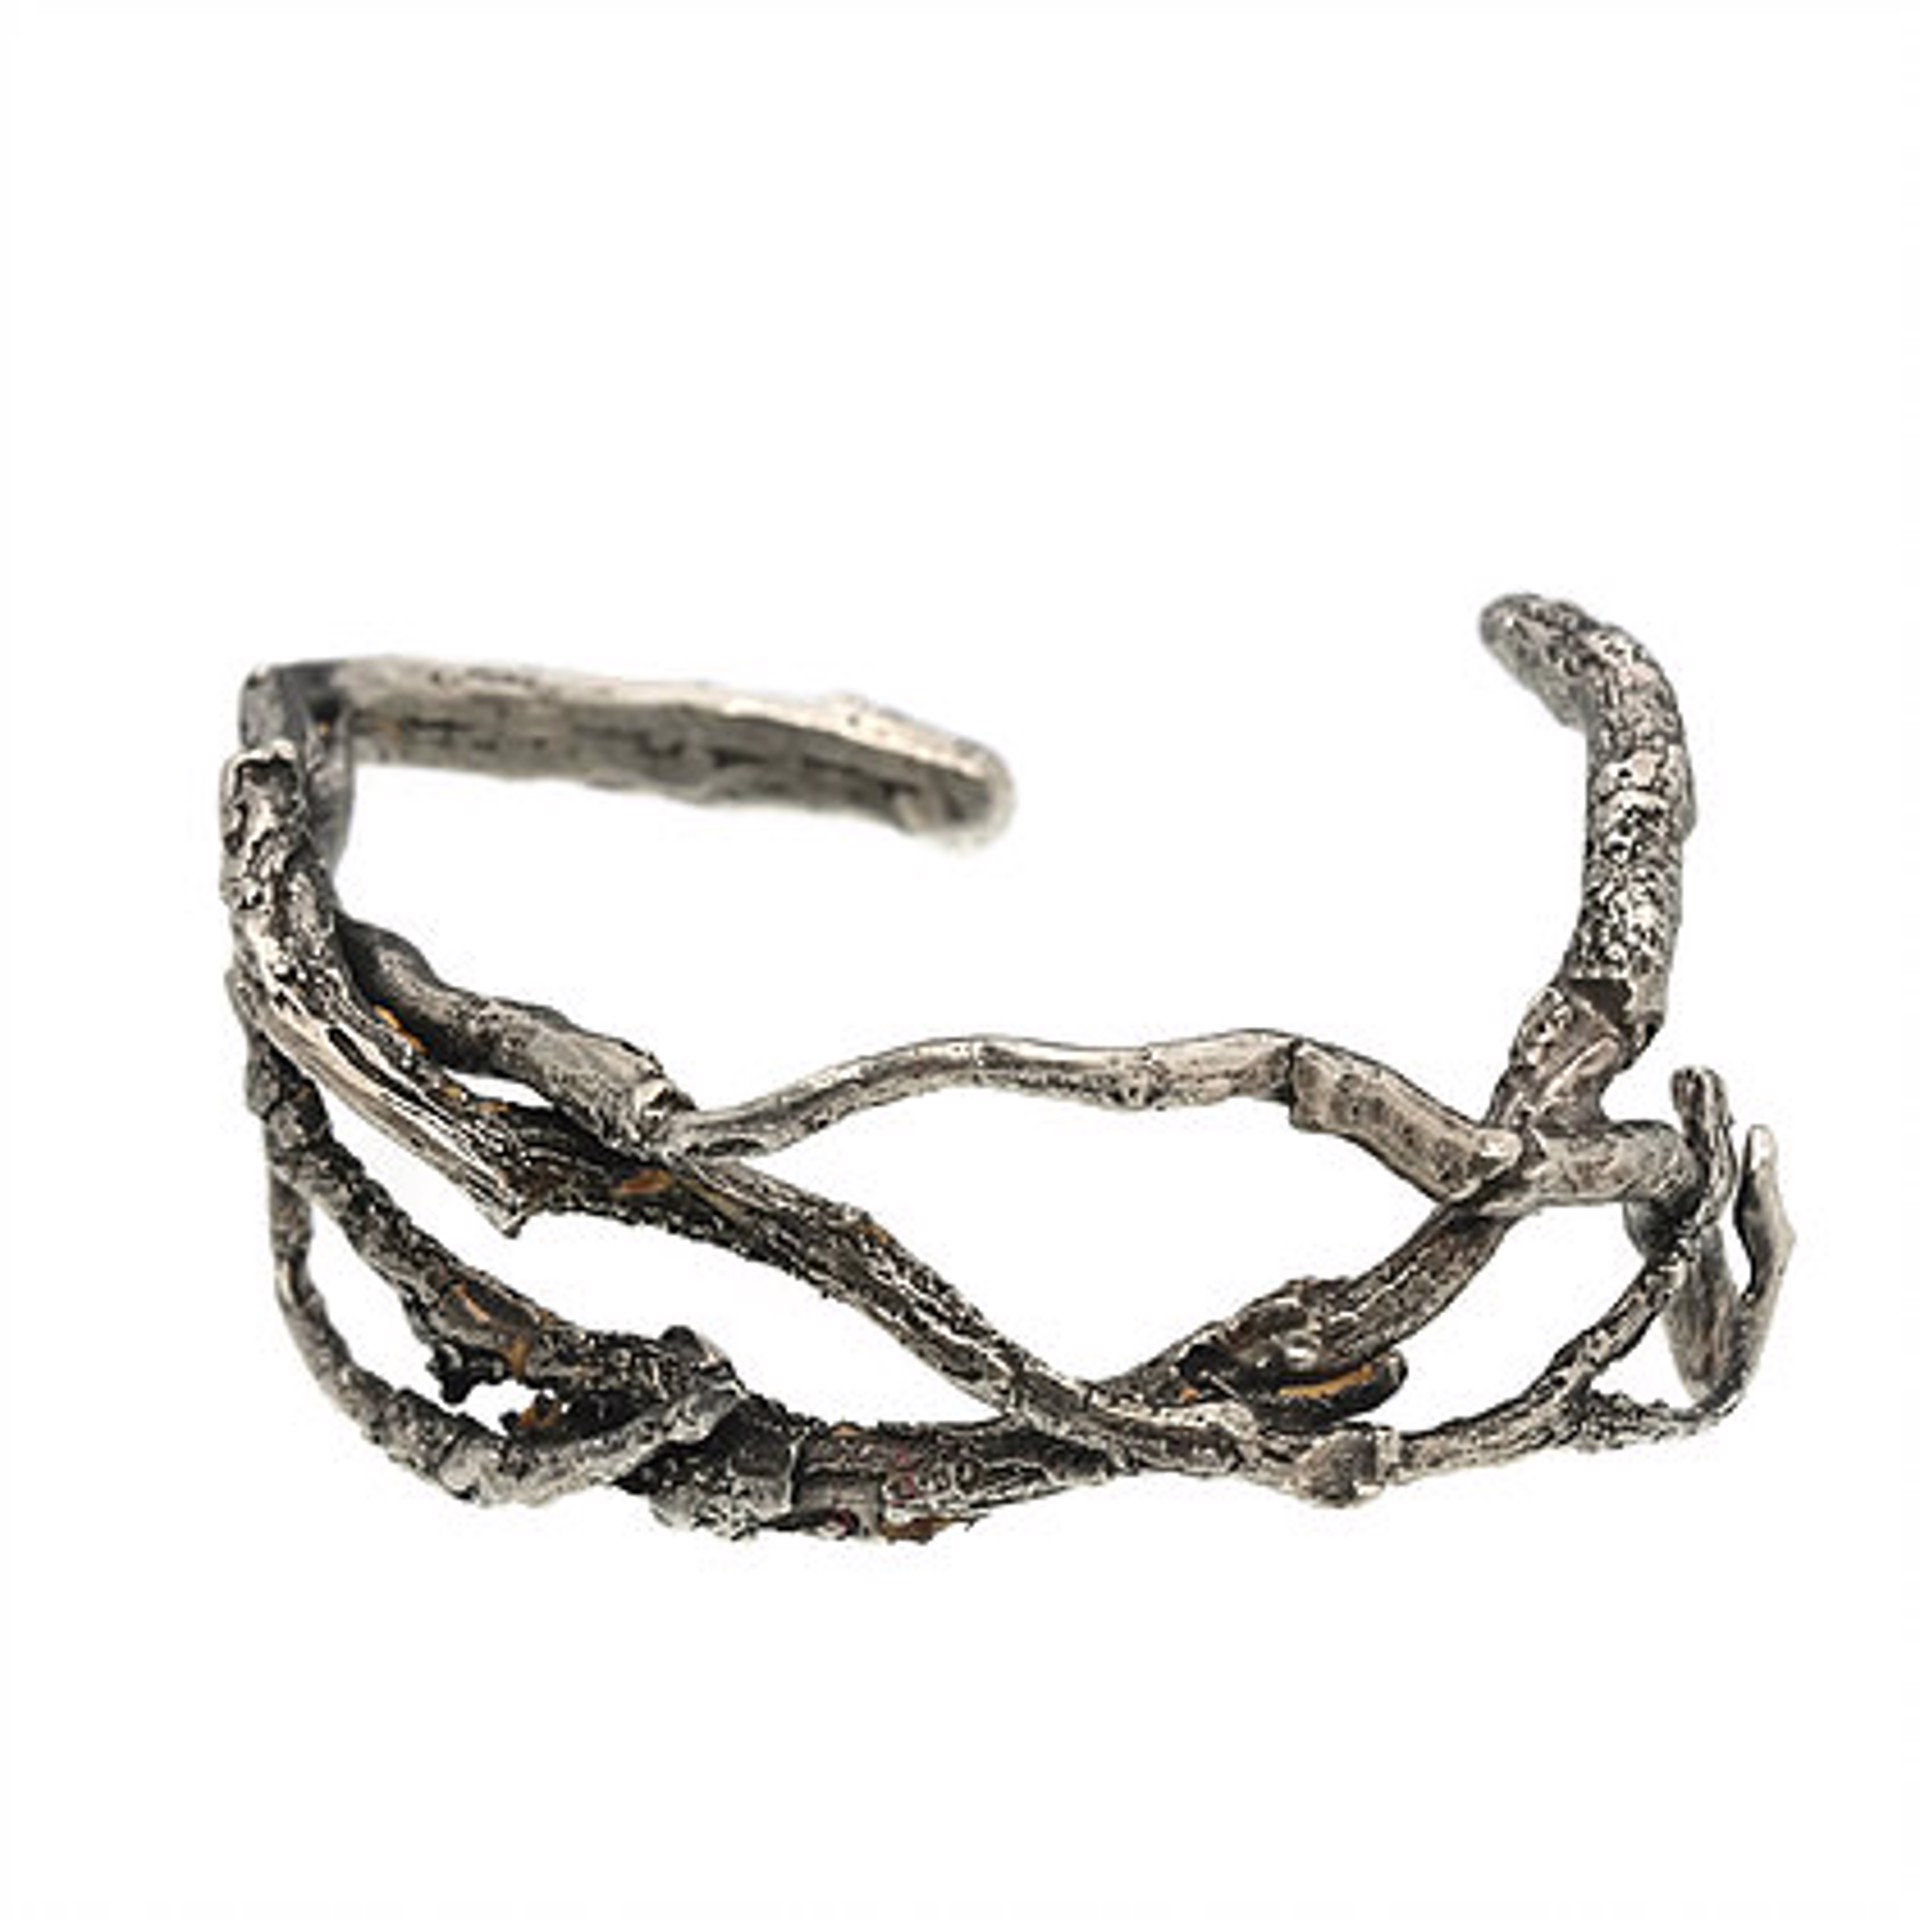 Twig Bracelet by April Ottey